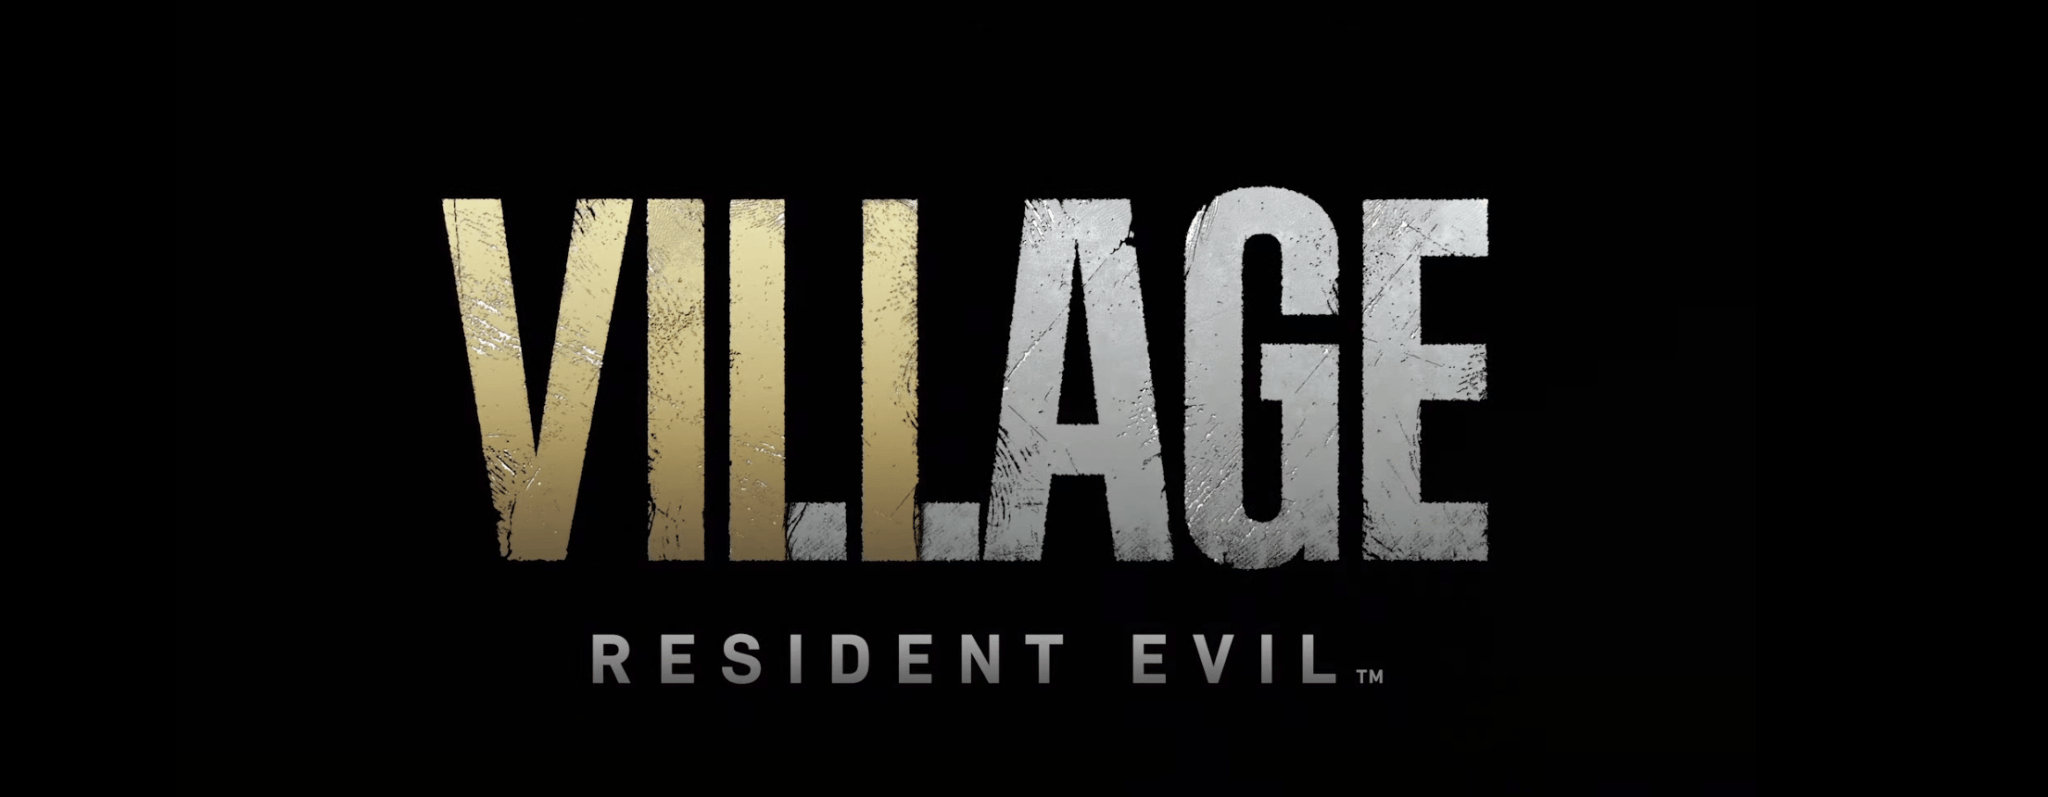 Capcom PS4 Resident Evil Village Standard Collector's Edition Video Game  Bundle - GB